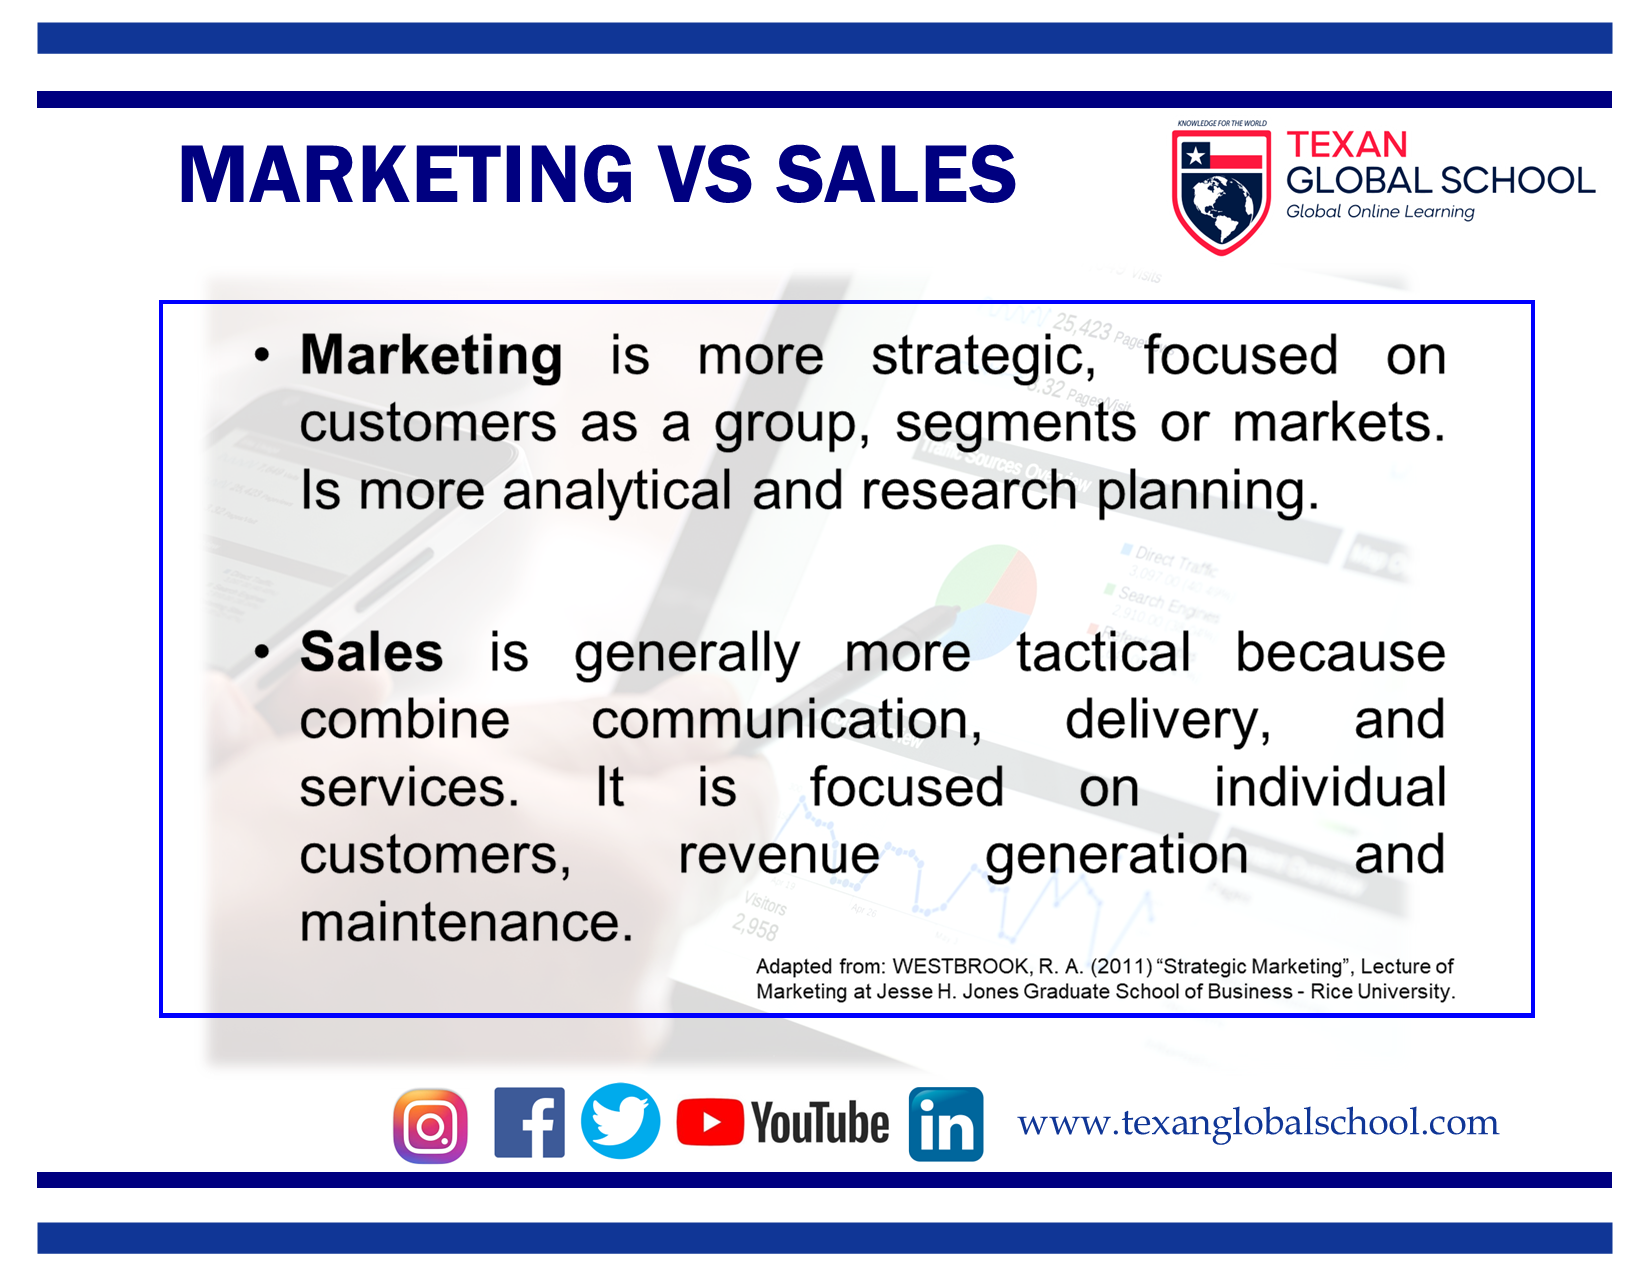 Marketing vs. Sales